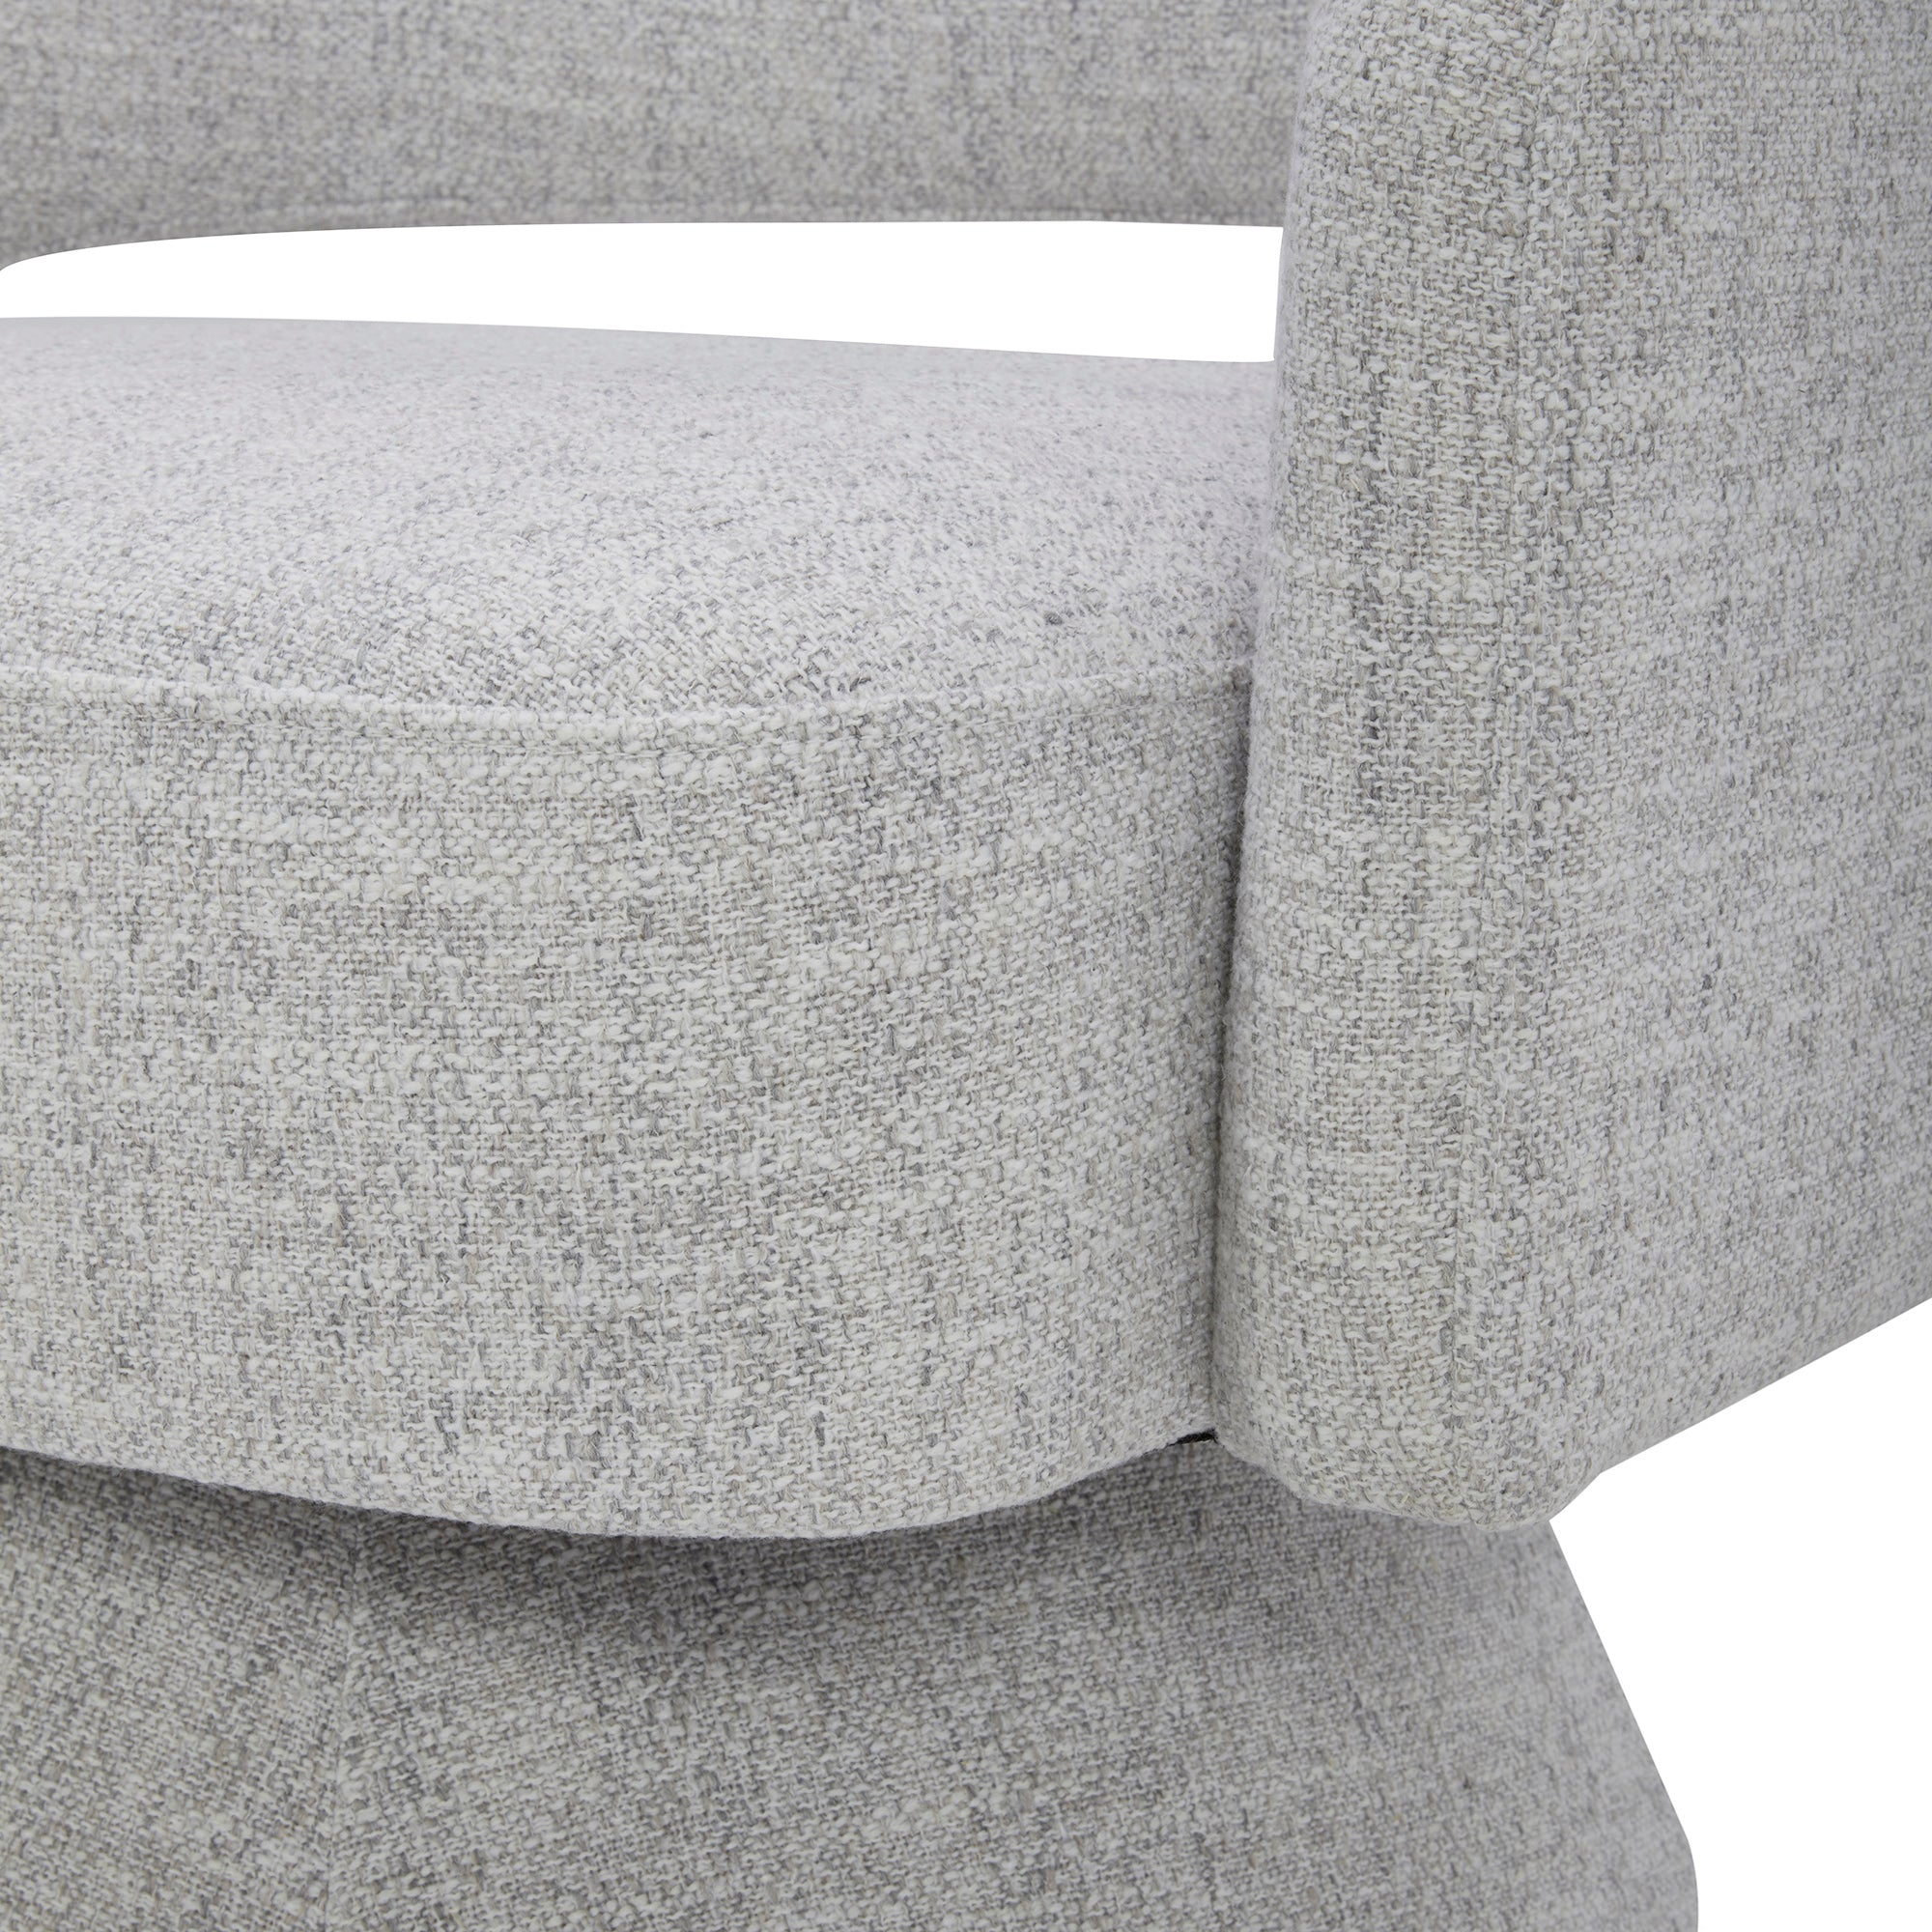 CHITA LIVING-Ambre Swivel Accent Chair-Accent Chair-Fabric-White (Multi-Colored)-